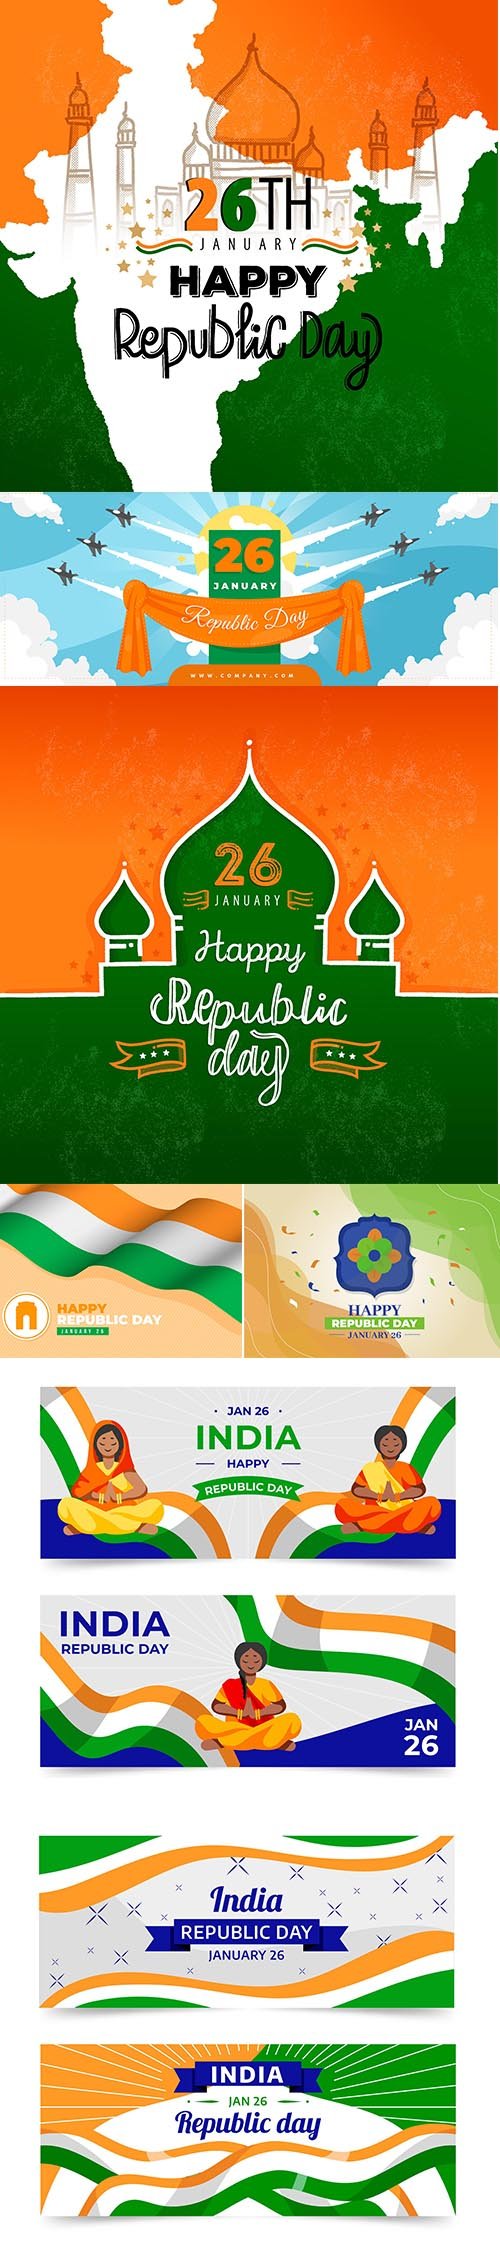 Flat design india republic day banner